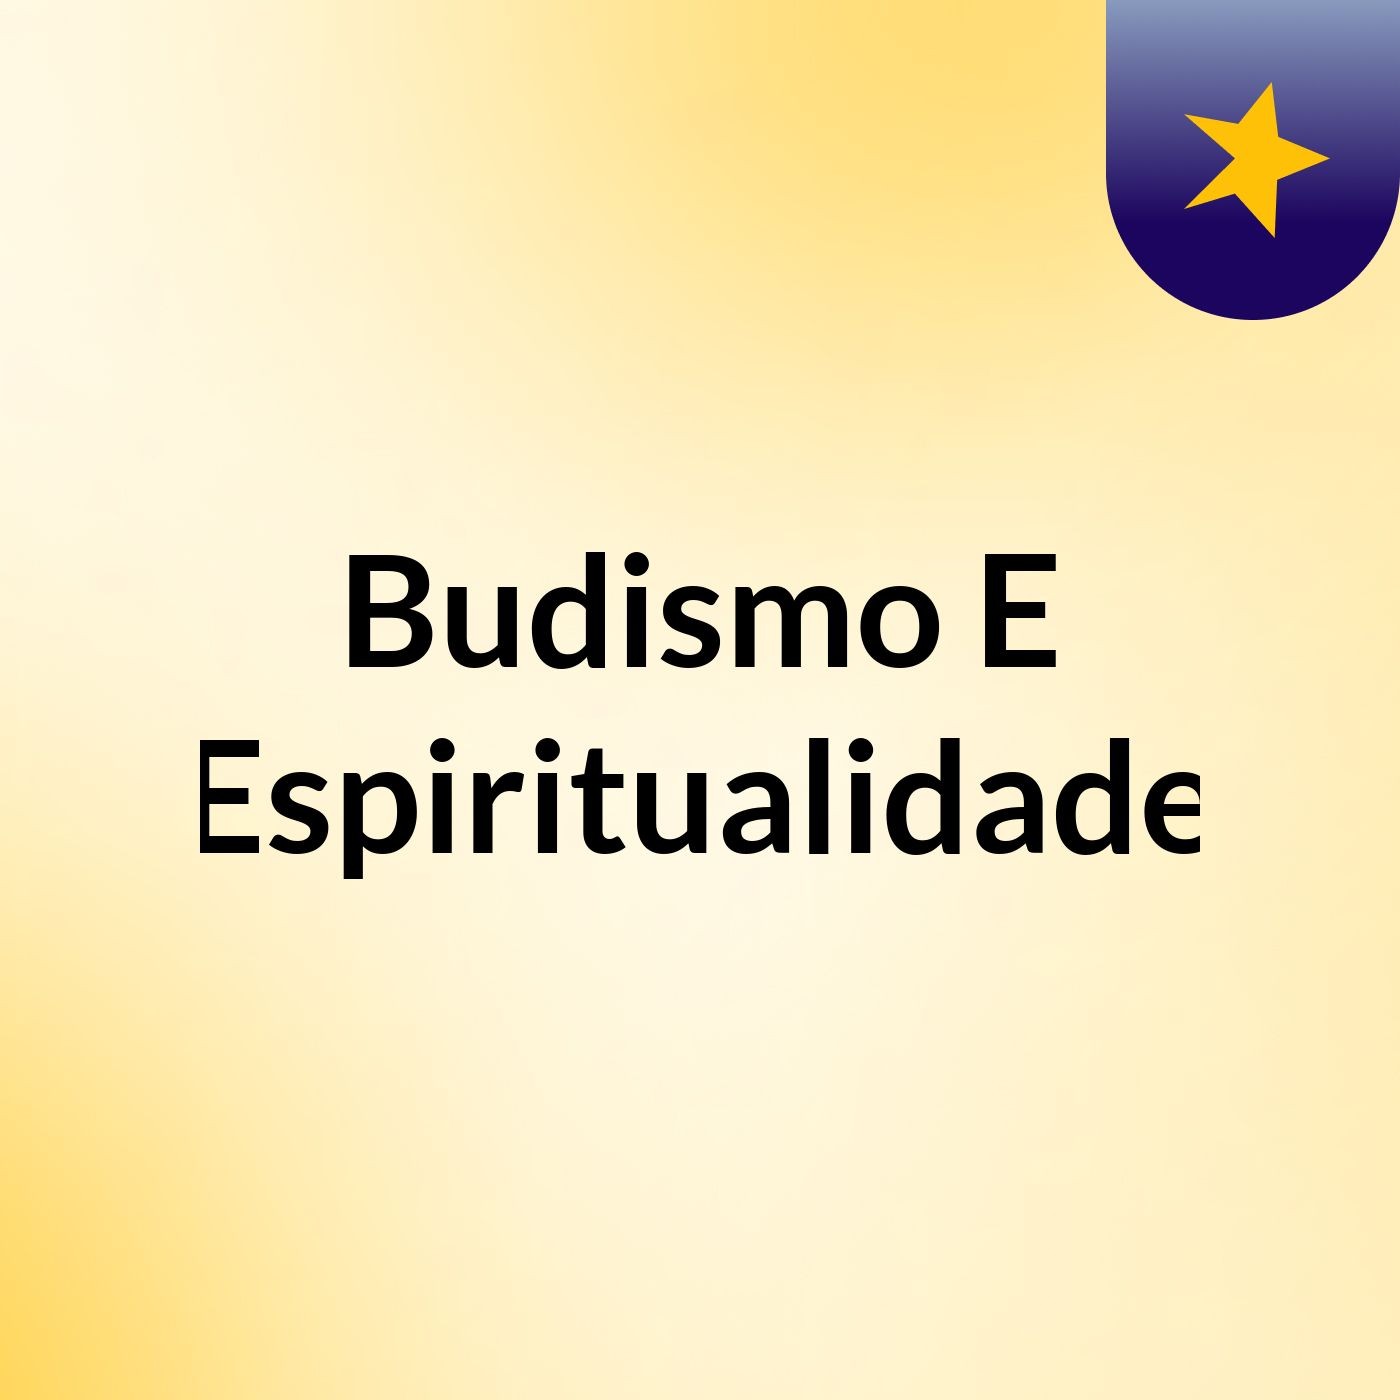 Budismo E Espiritualidade